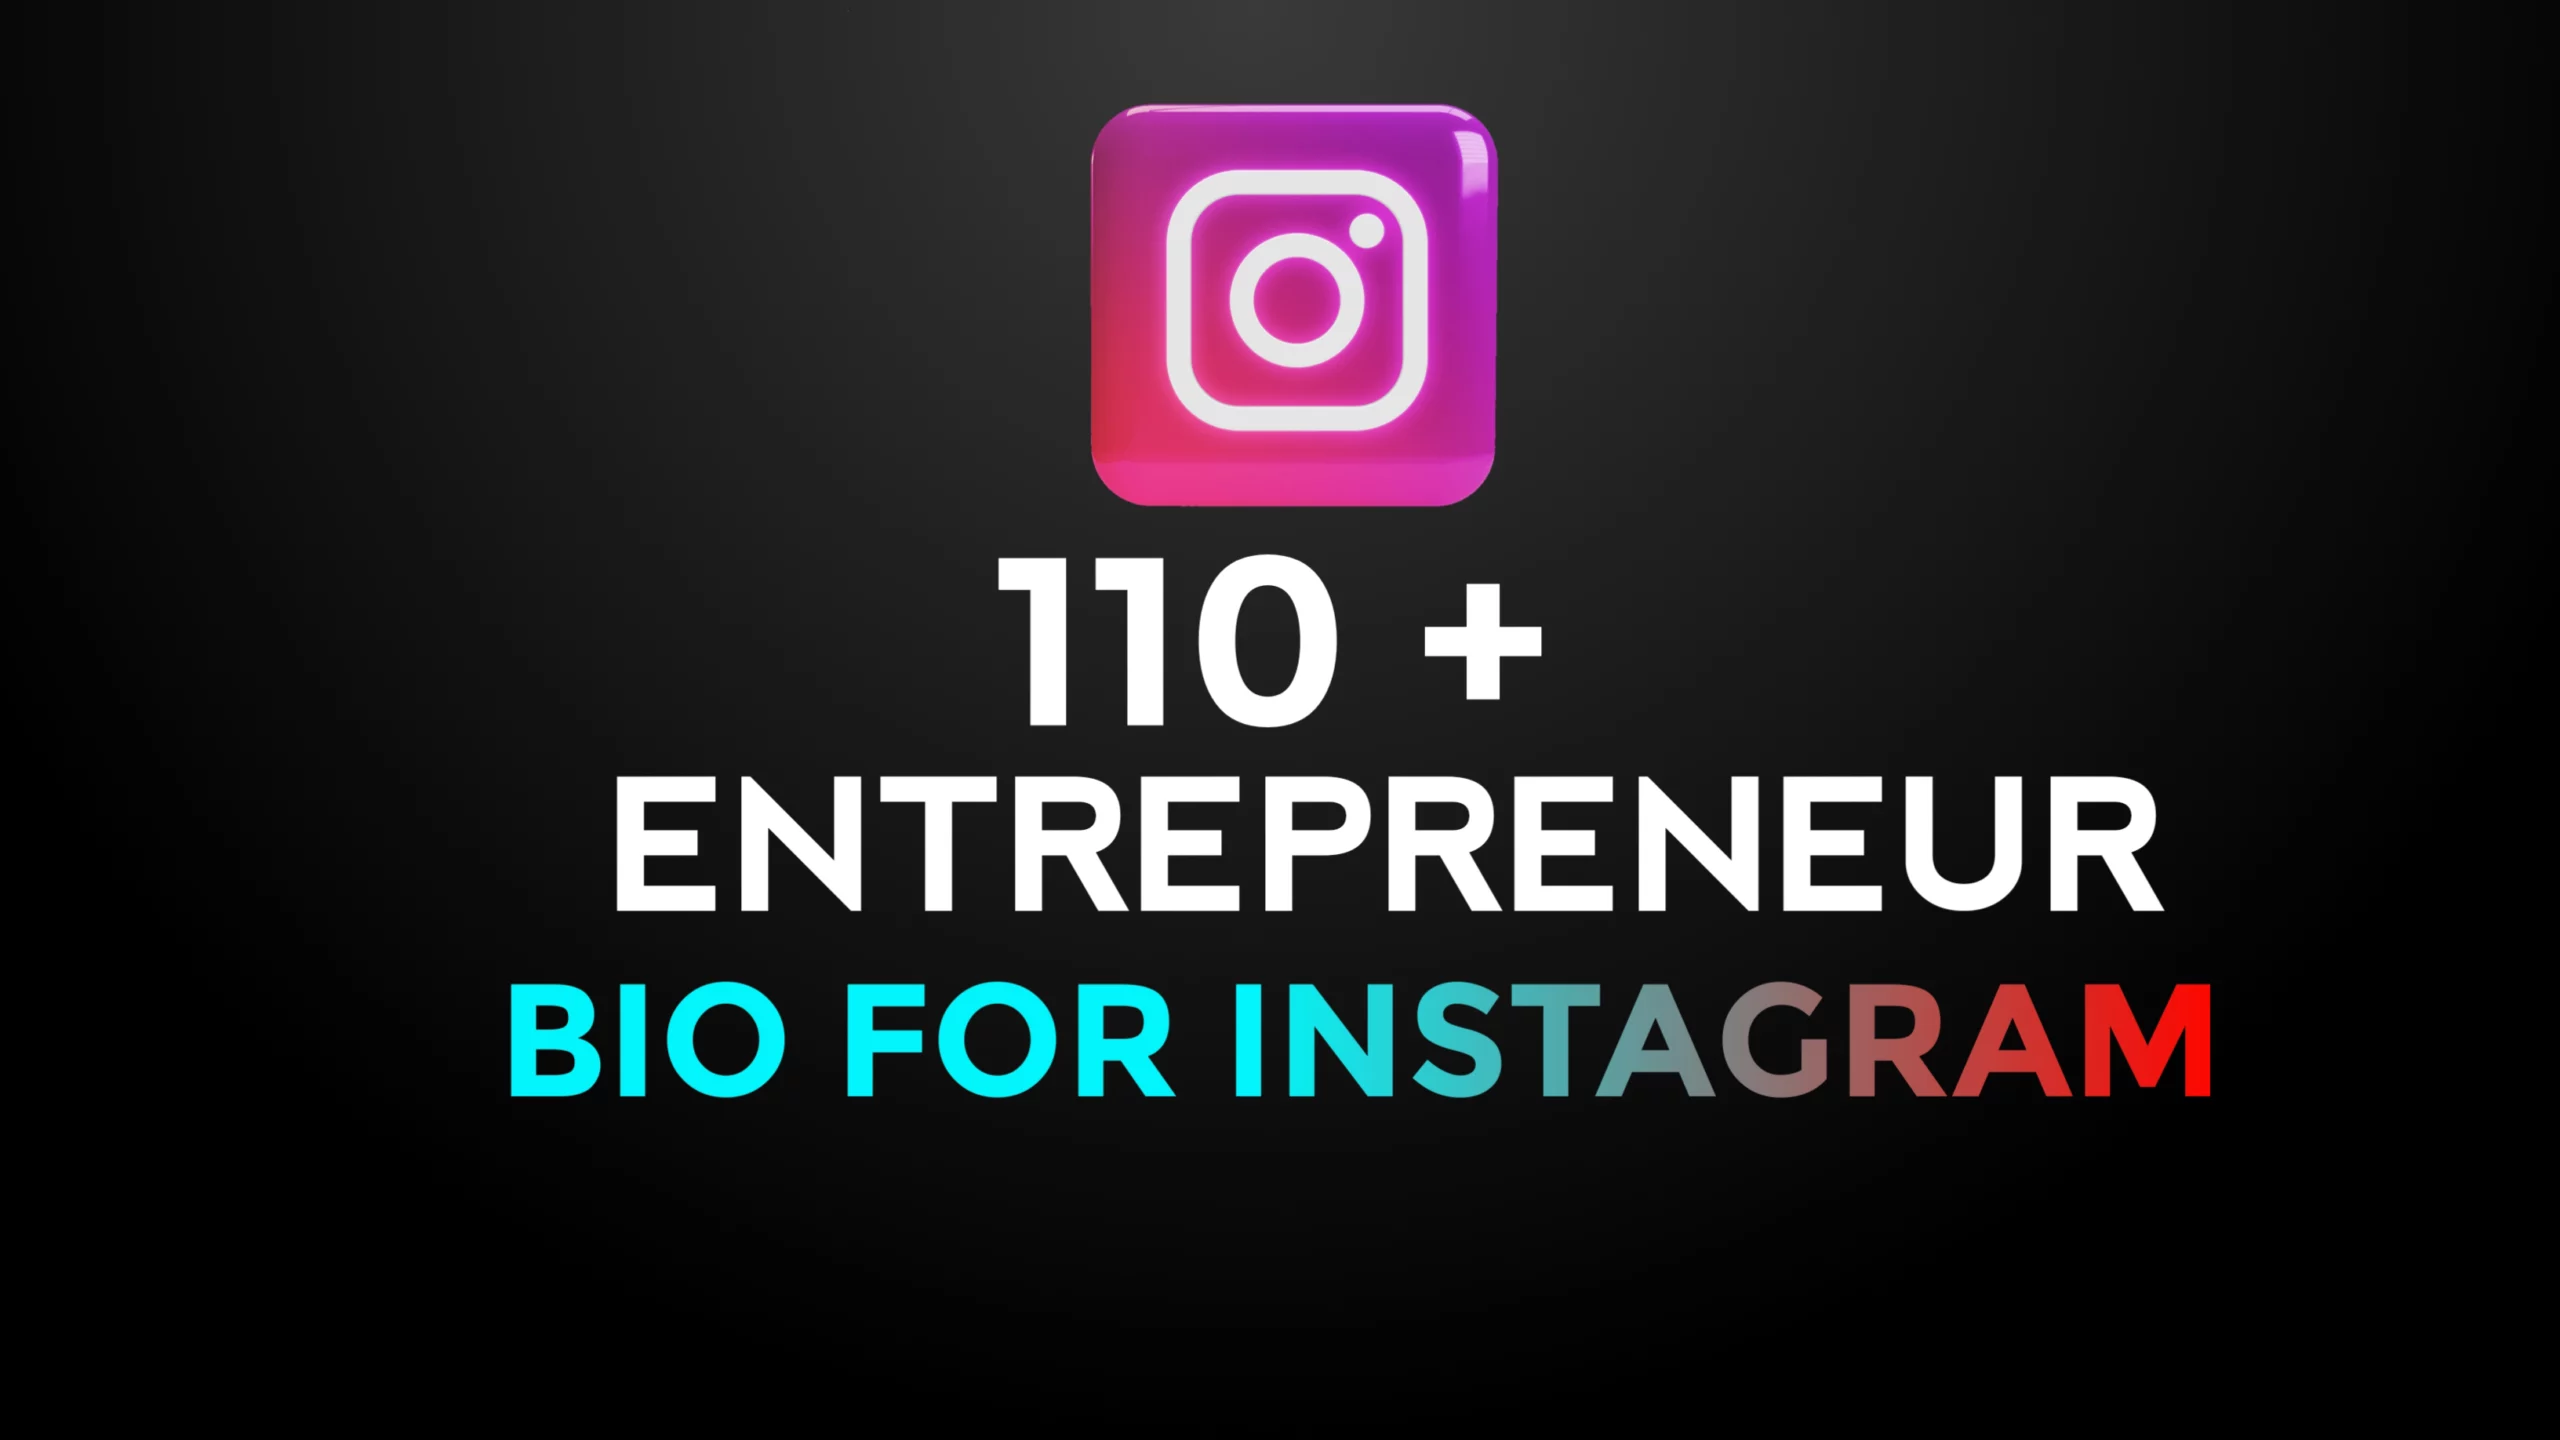 110+ Attractive Entrepreneur Instagram Bio For Business Owner